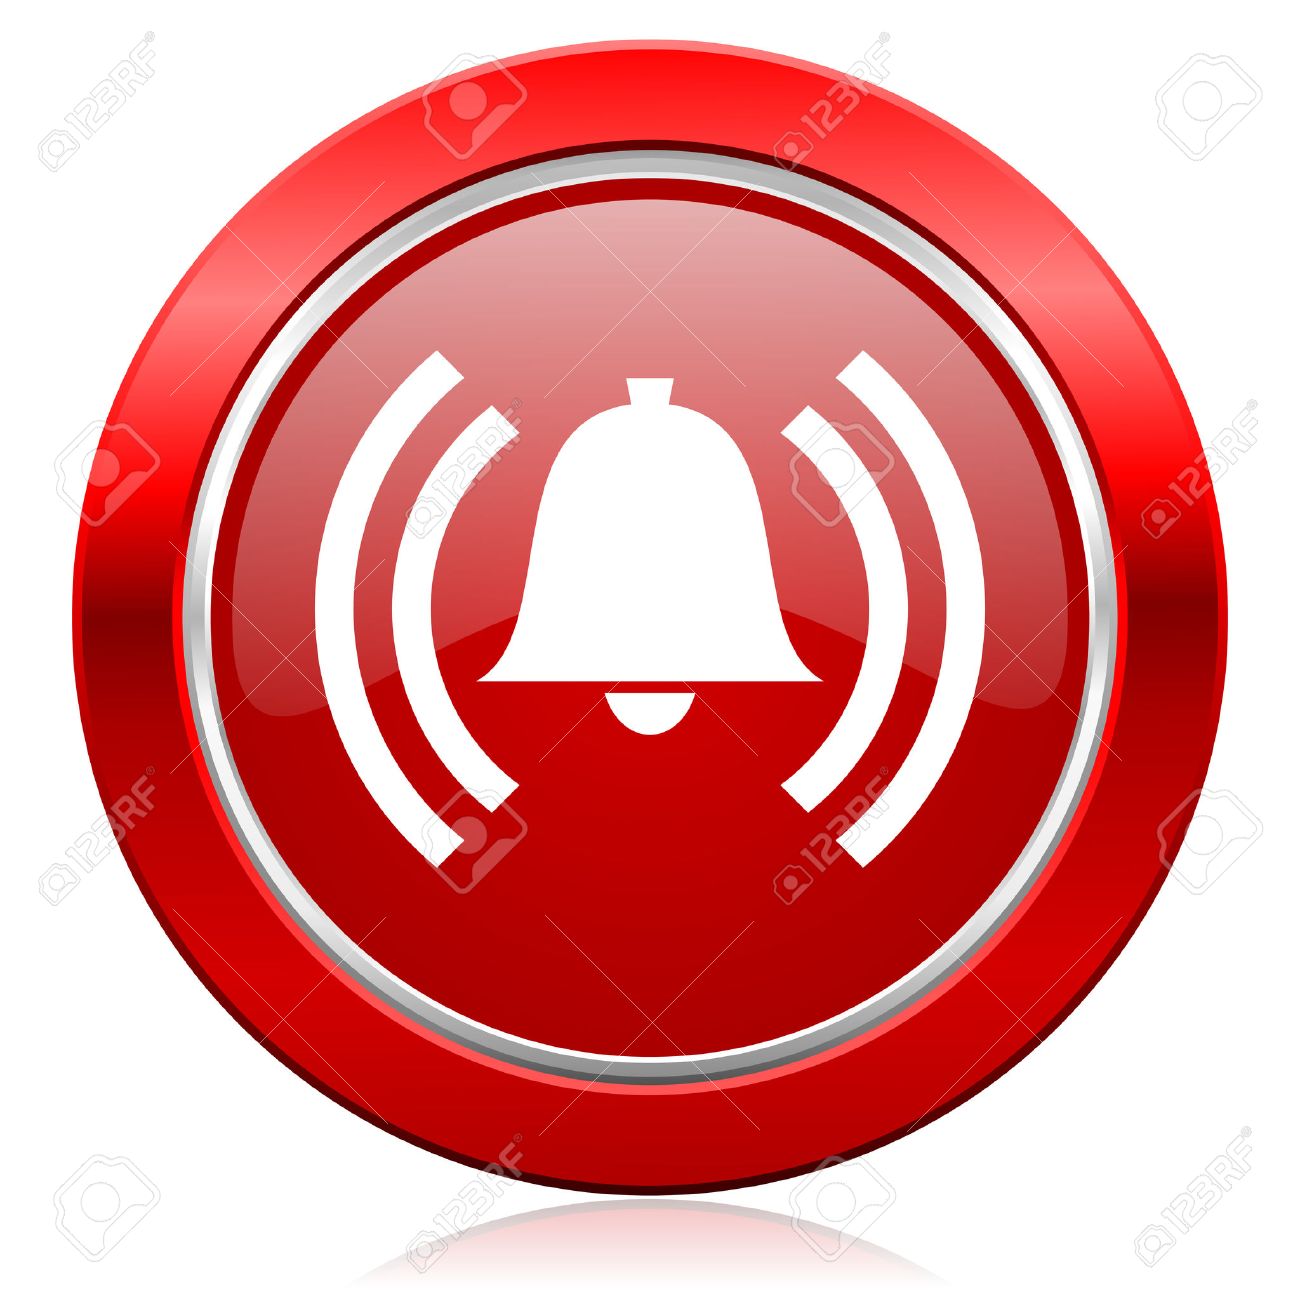 File:OOjs UI icon alert-warning.svg - Wikimedia Commons